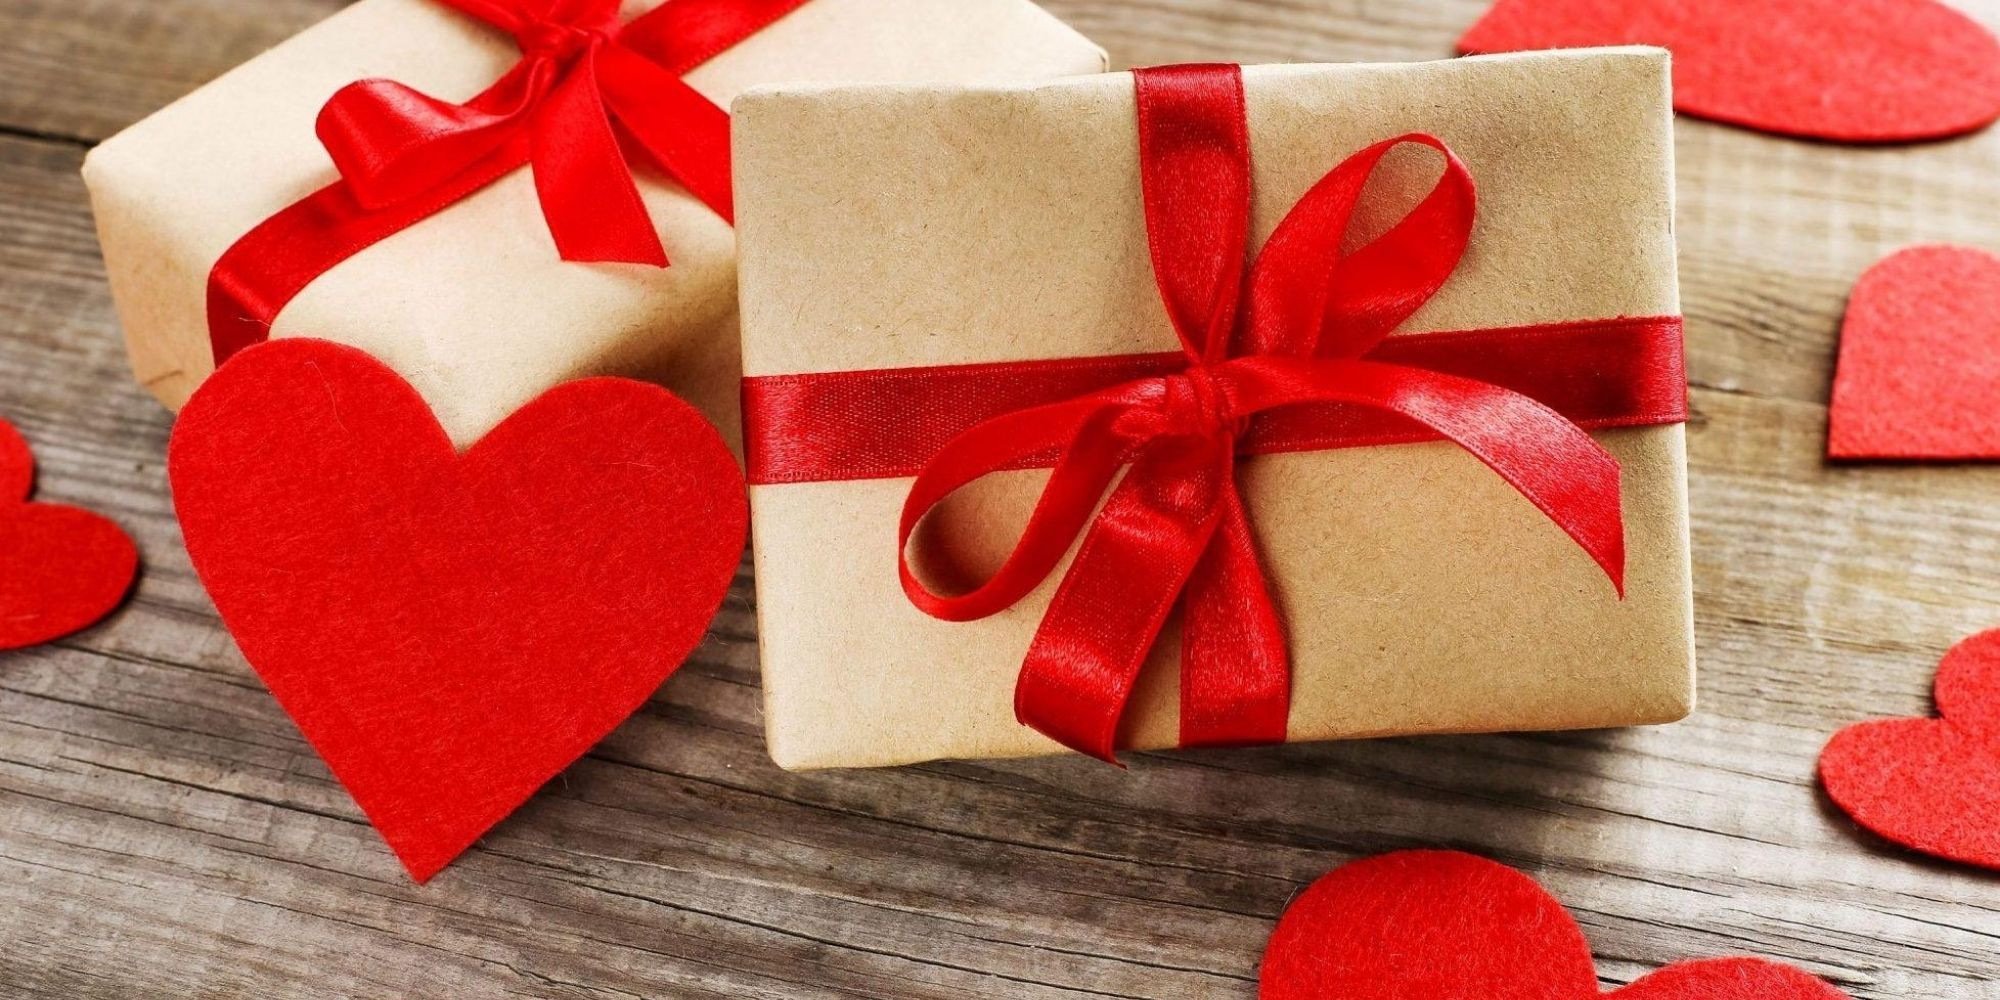 Valentine 2020 Gift Ideas
 Best Valentines Gifts for Her Updated 2020